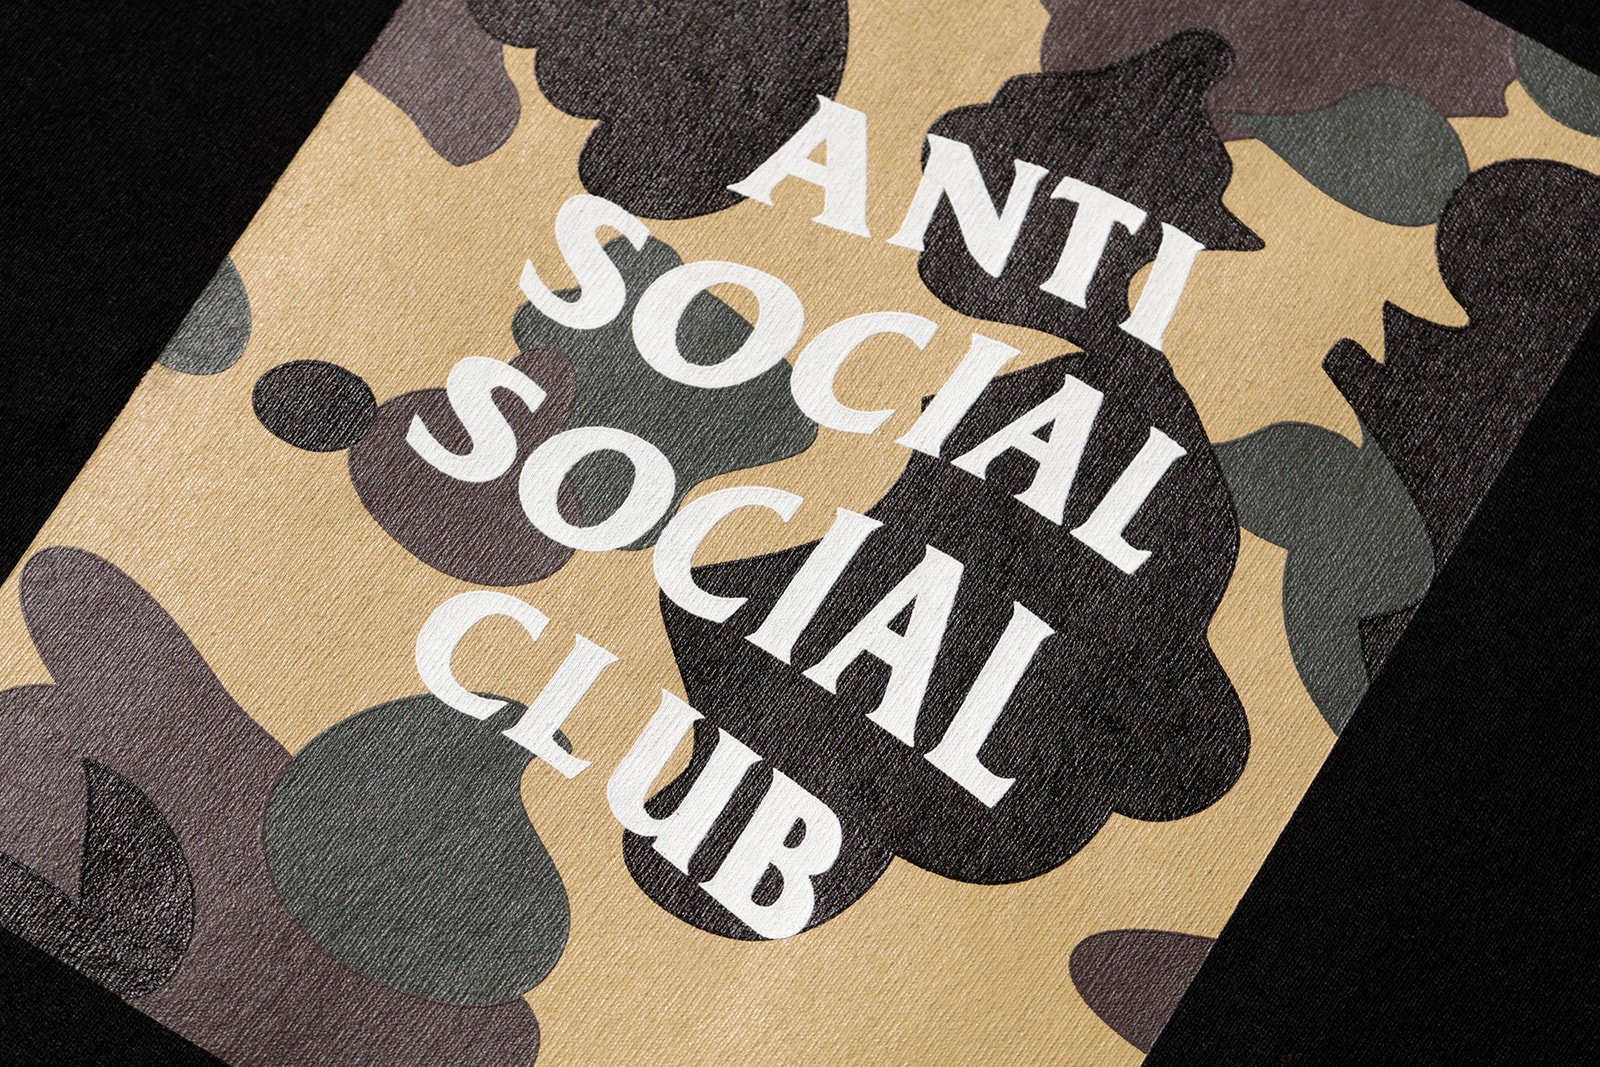 Anti Social Social Club x BAPE Collection Lookbook